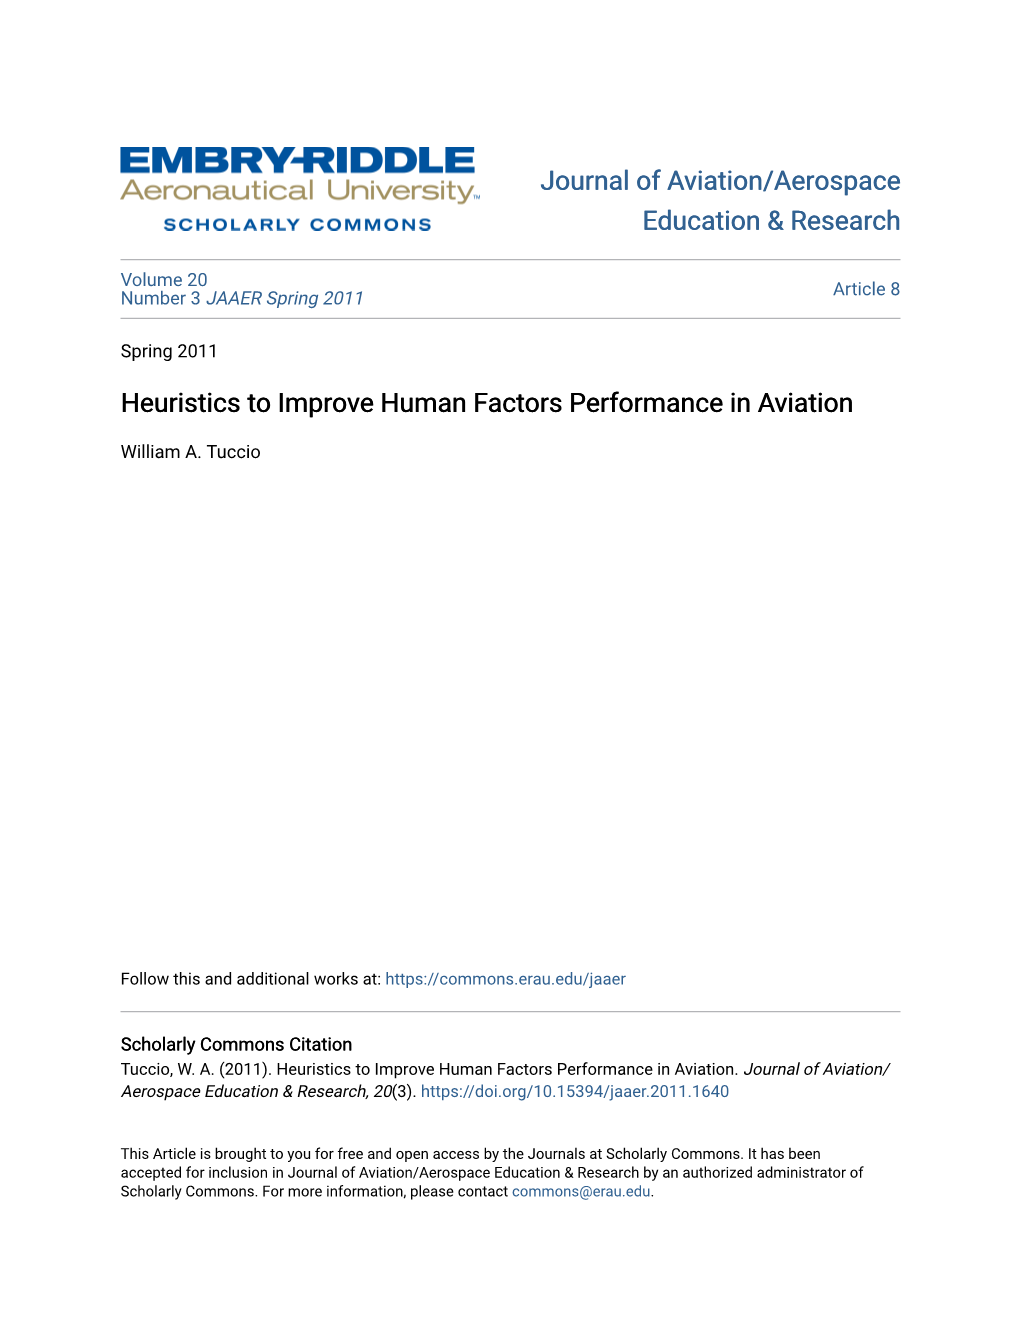 Heuristics to Improve Human Factors Performance in Aviation